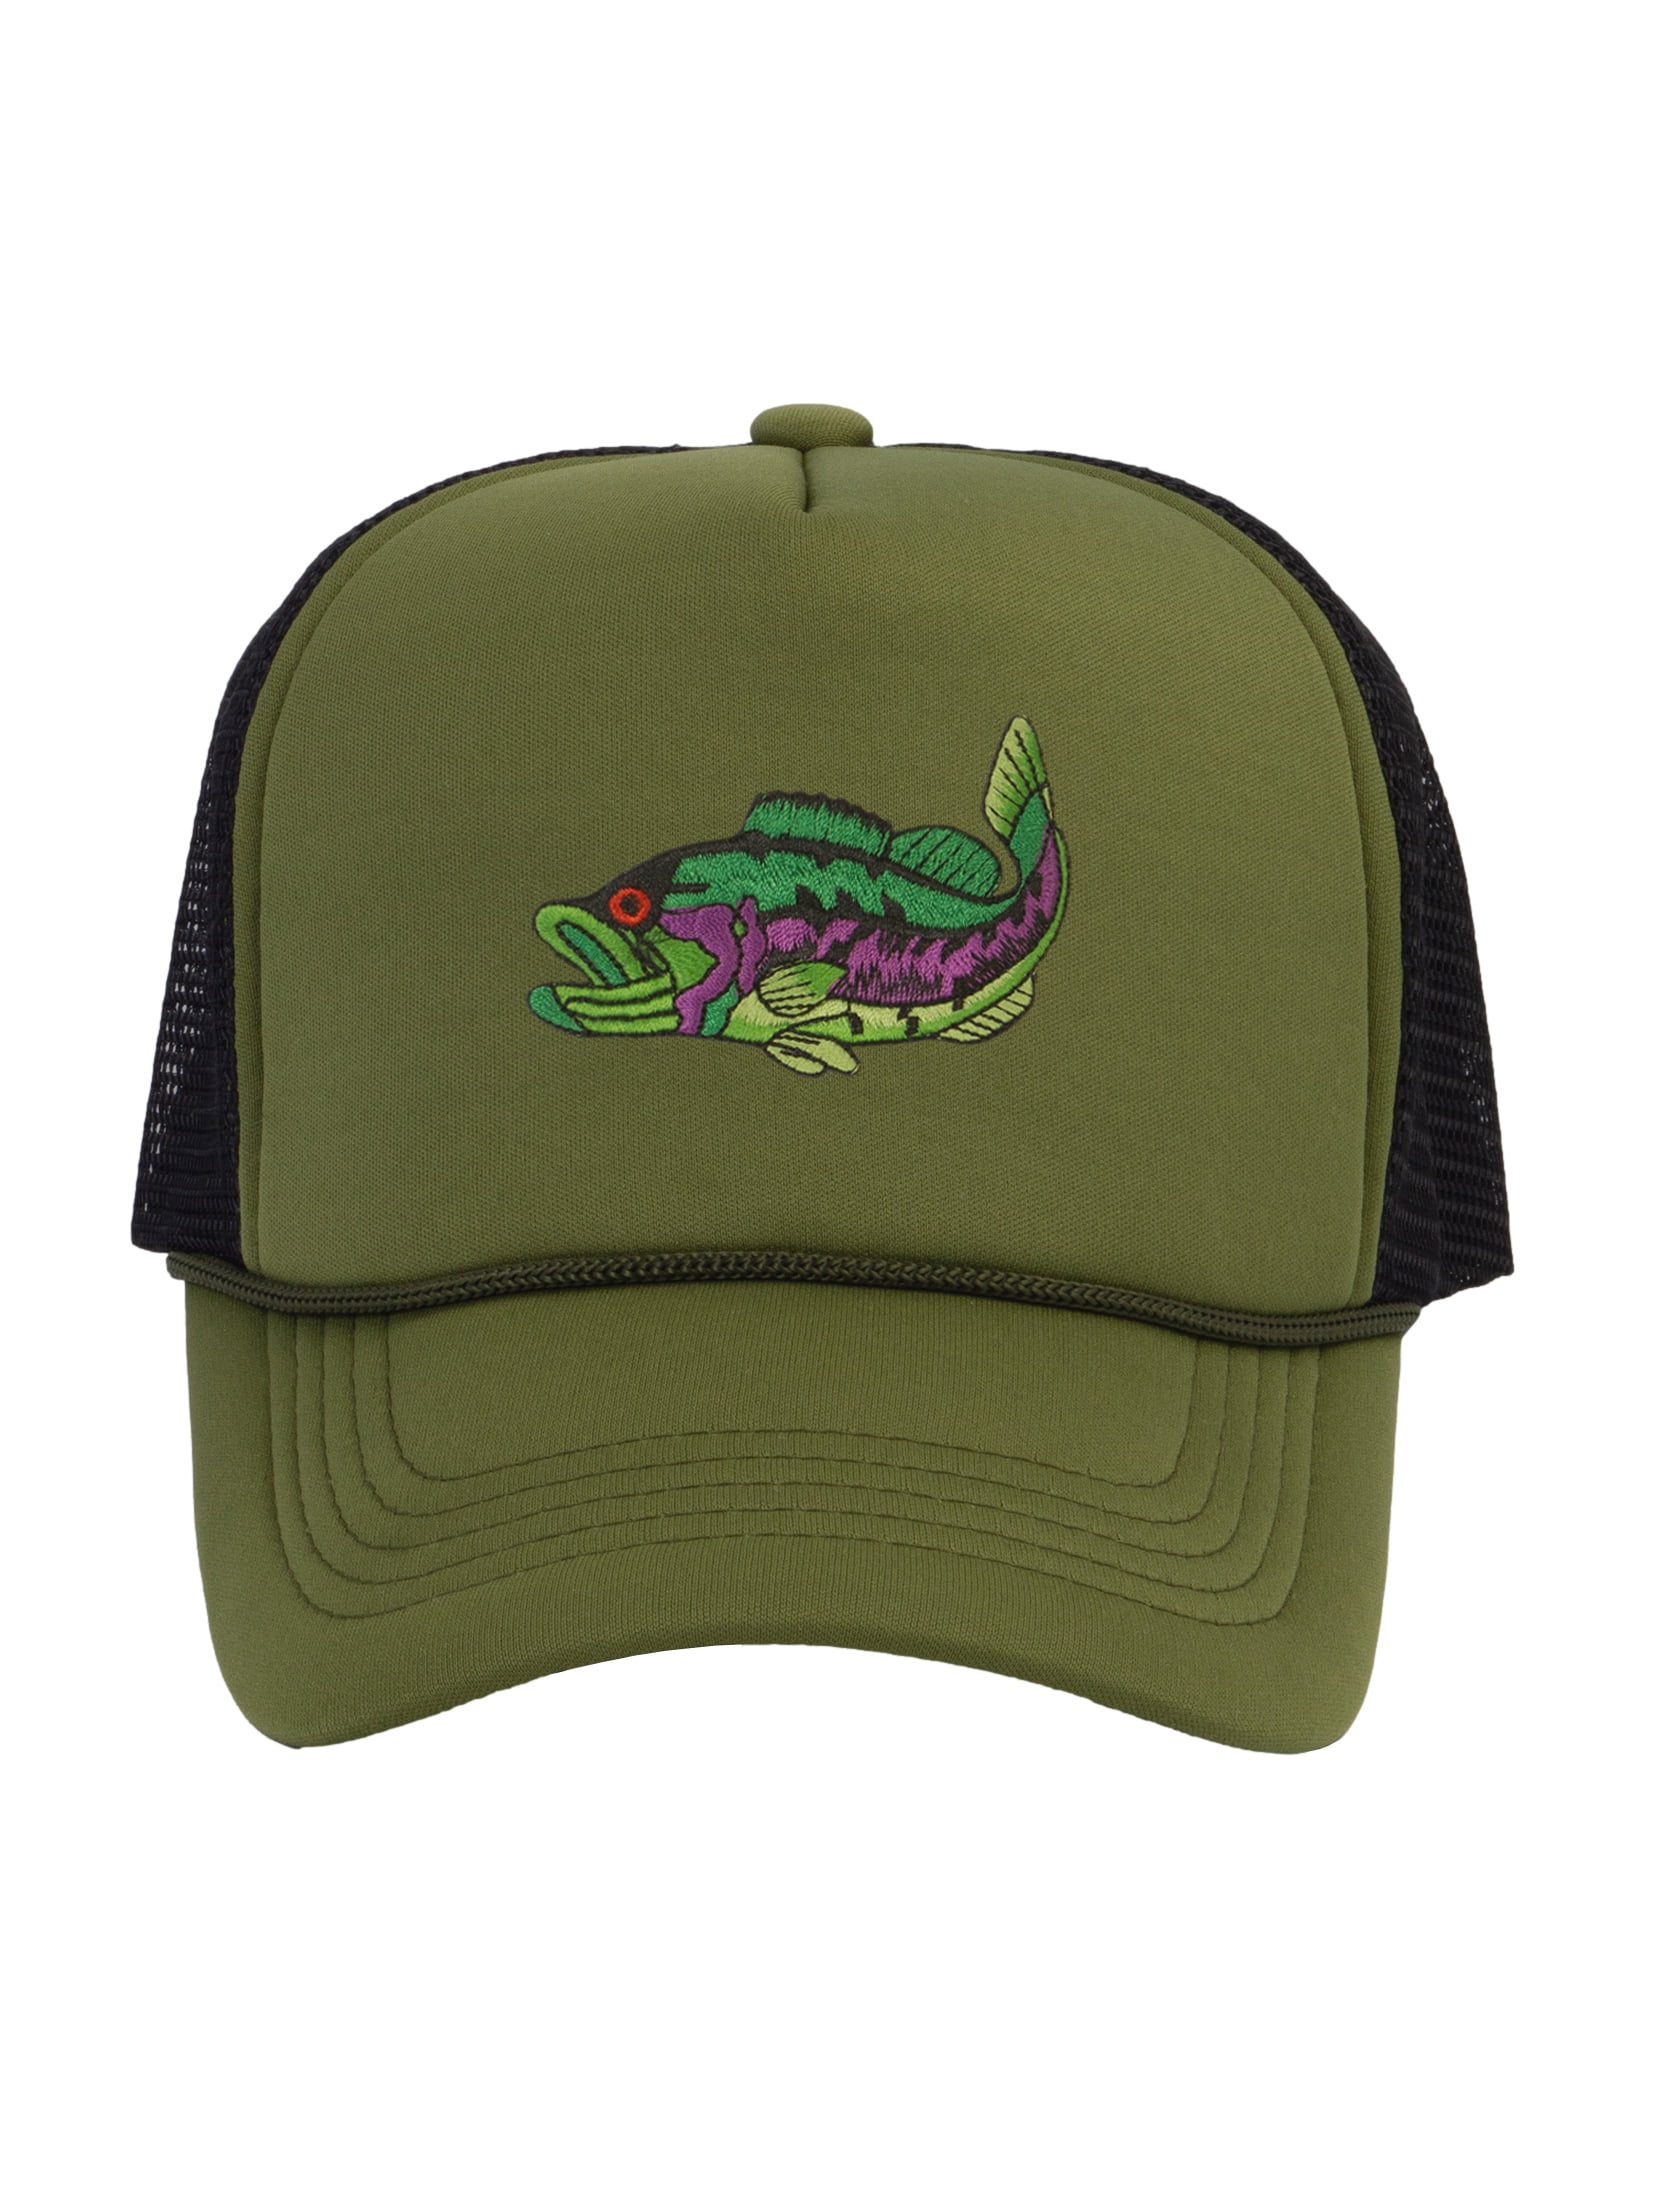 Outdoor Cap OC Bass Fishing Hat Tan Brown Green Print Trucker